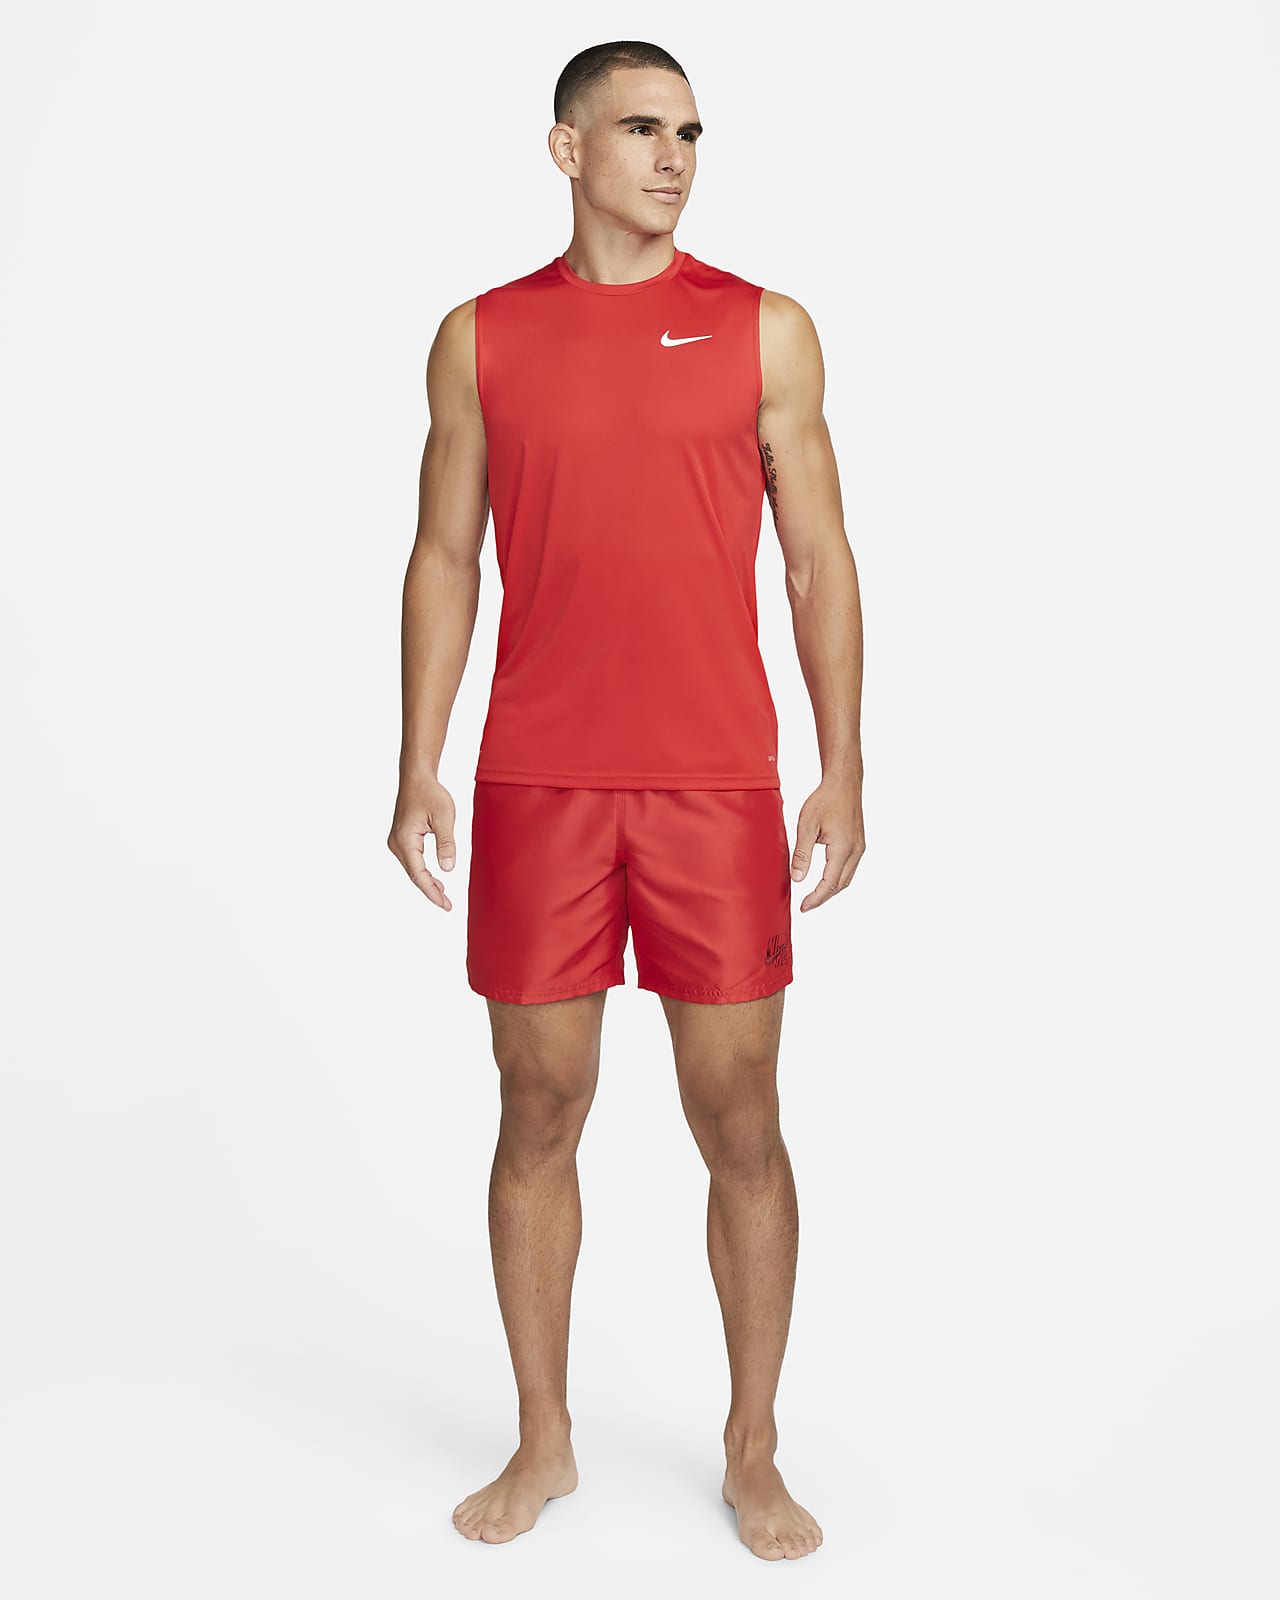 Nike Men's Swim Tank Top.